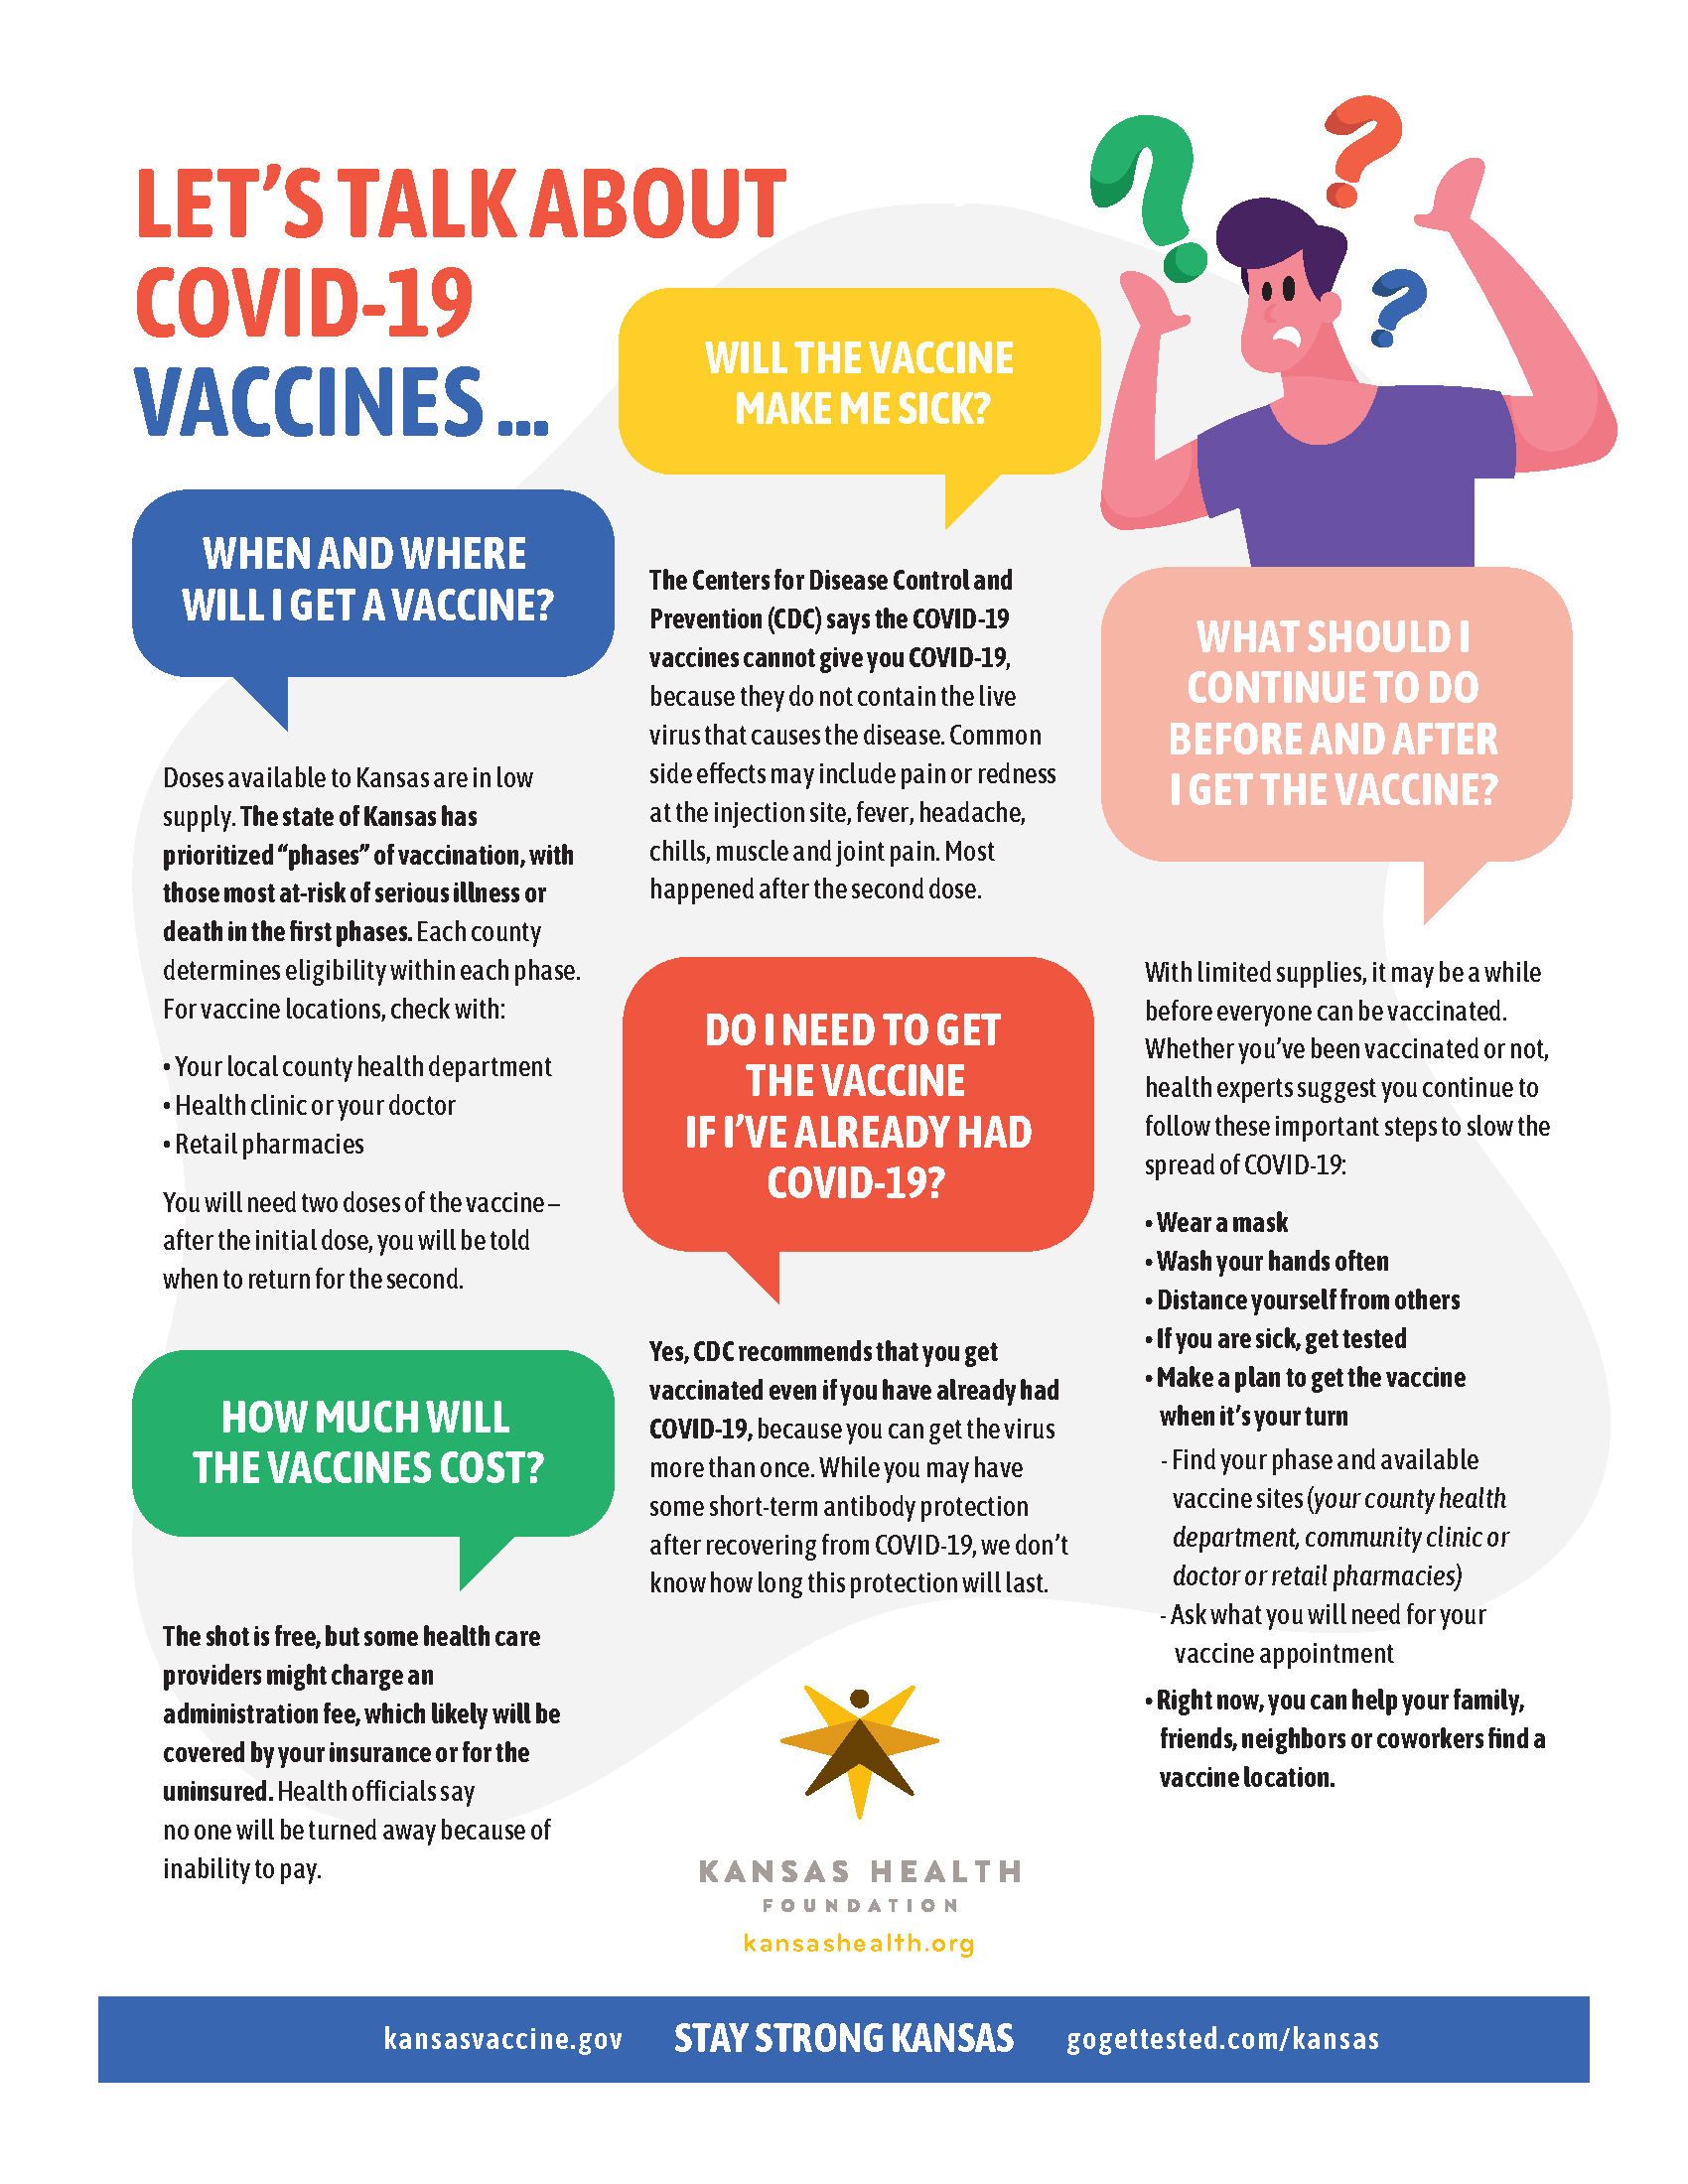 Covid-19 Vaccine - Stormont Vail Health